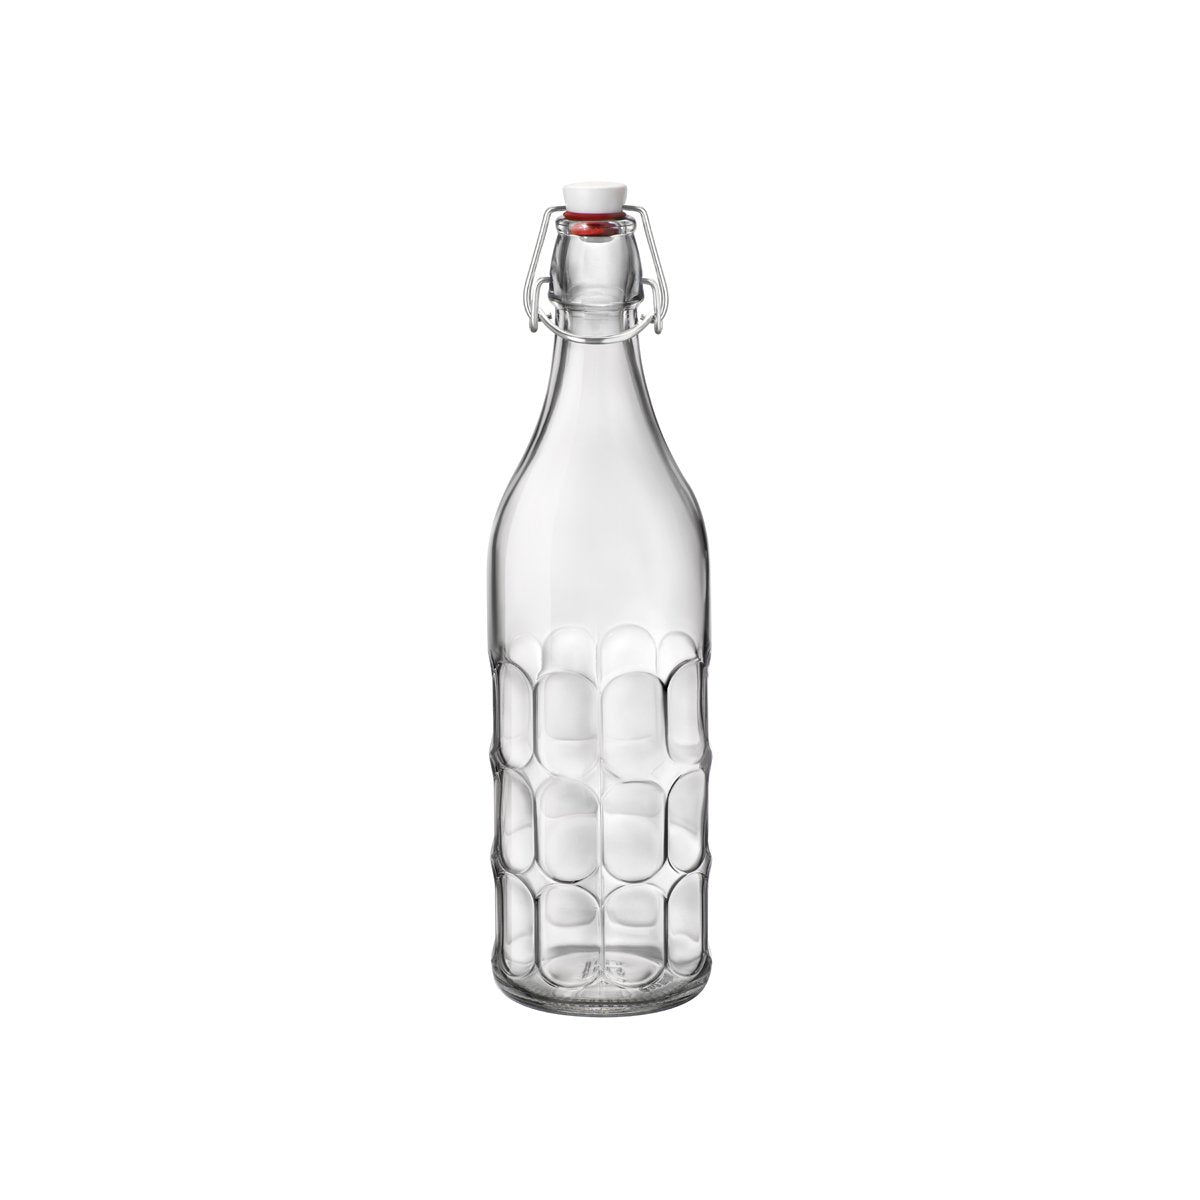 330-105 Bormioli Rocco Moresca Bottle 1035ml With Swing Top Lid Tomkin Australia Hospitality Supplies